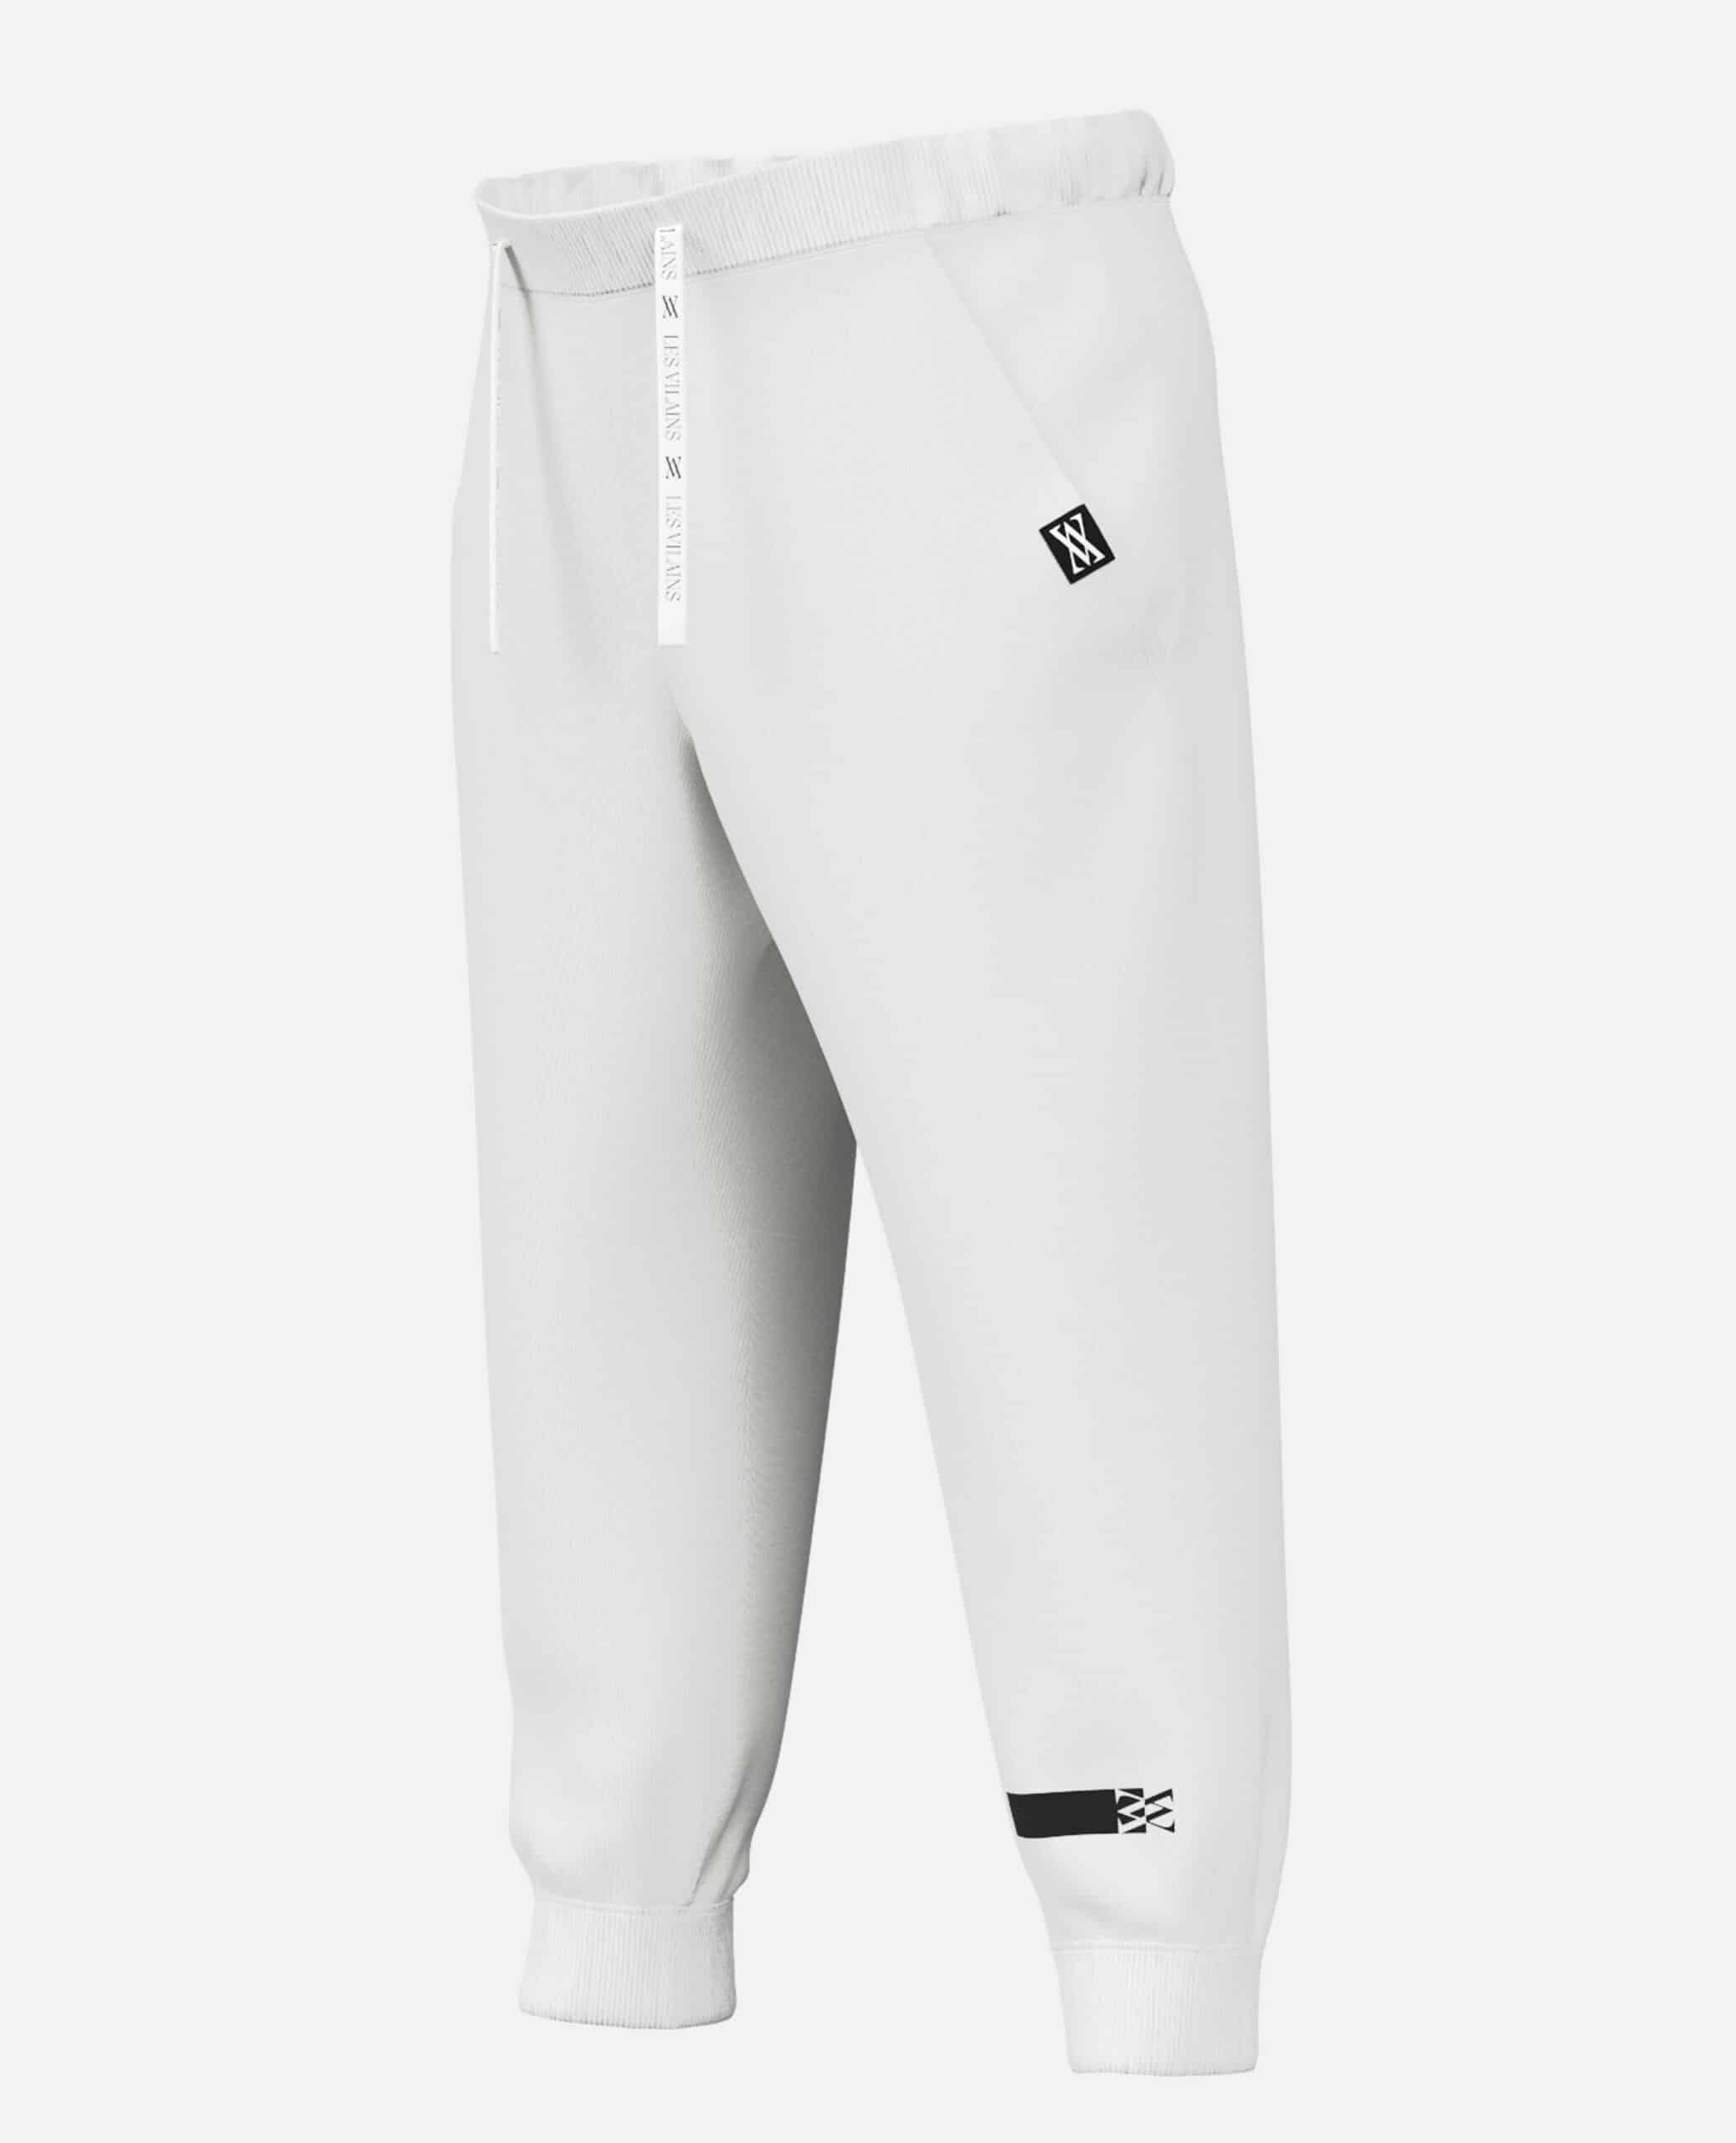 Les Vilains Original Streetwear sweatpants white